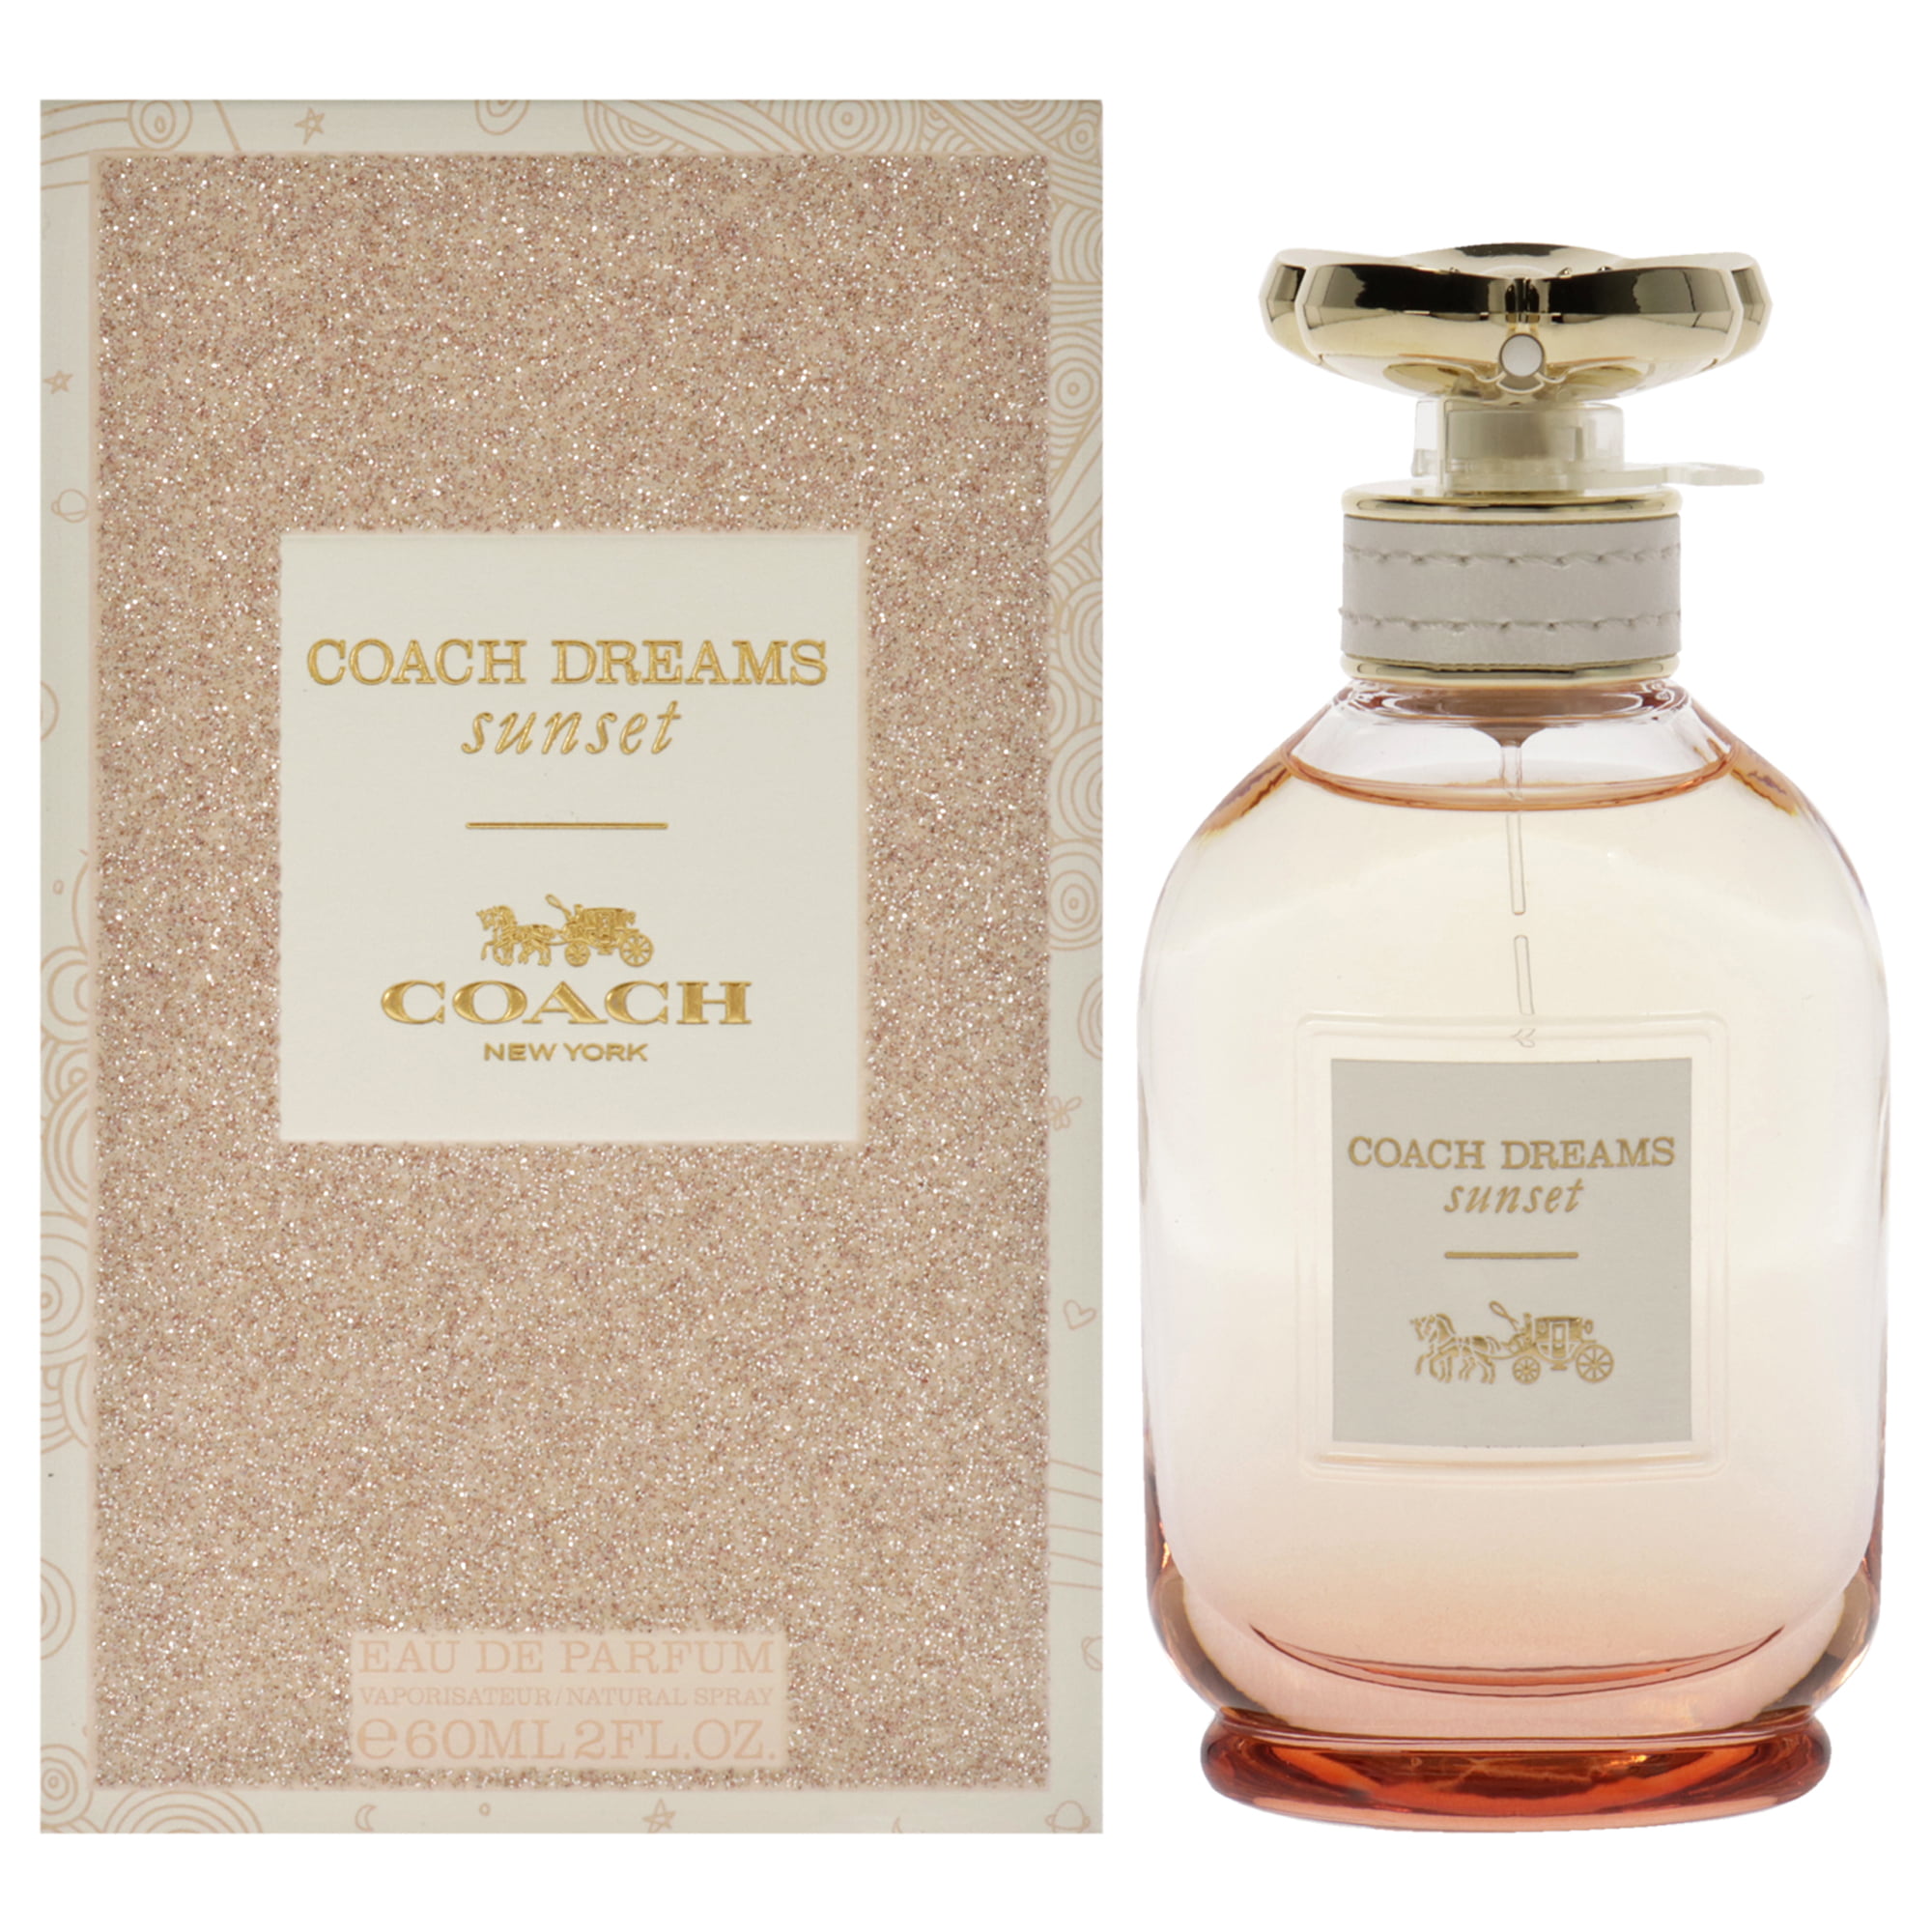 Coach Dreams Sunset by Coach for Women – 2 oz EDP Spray